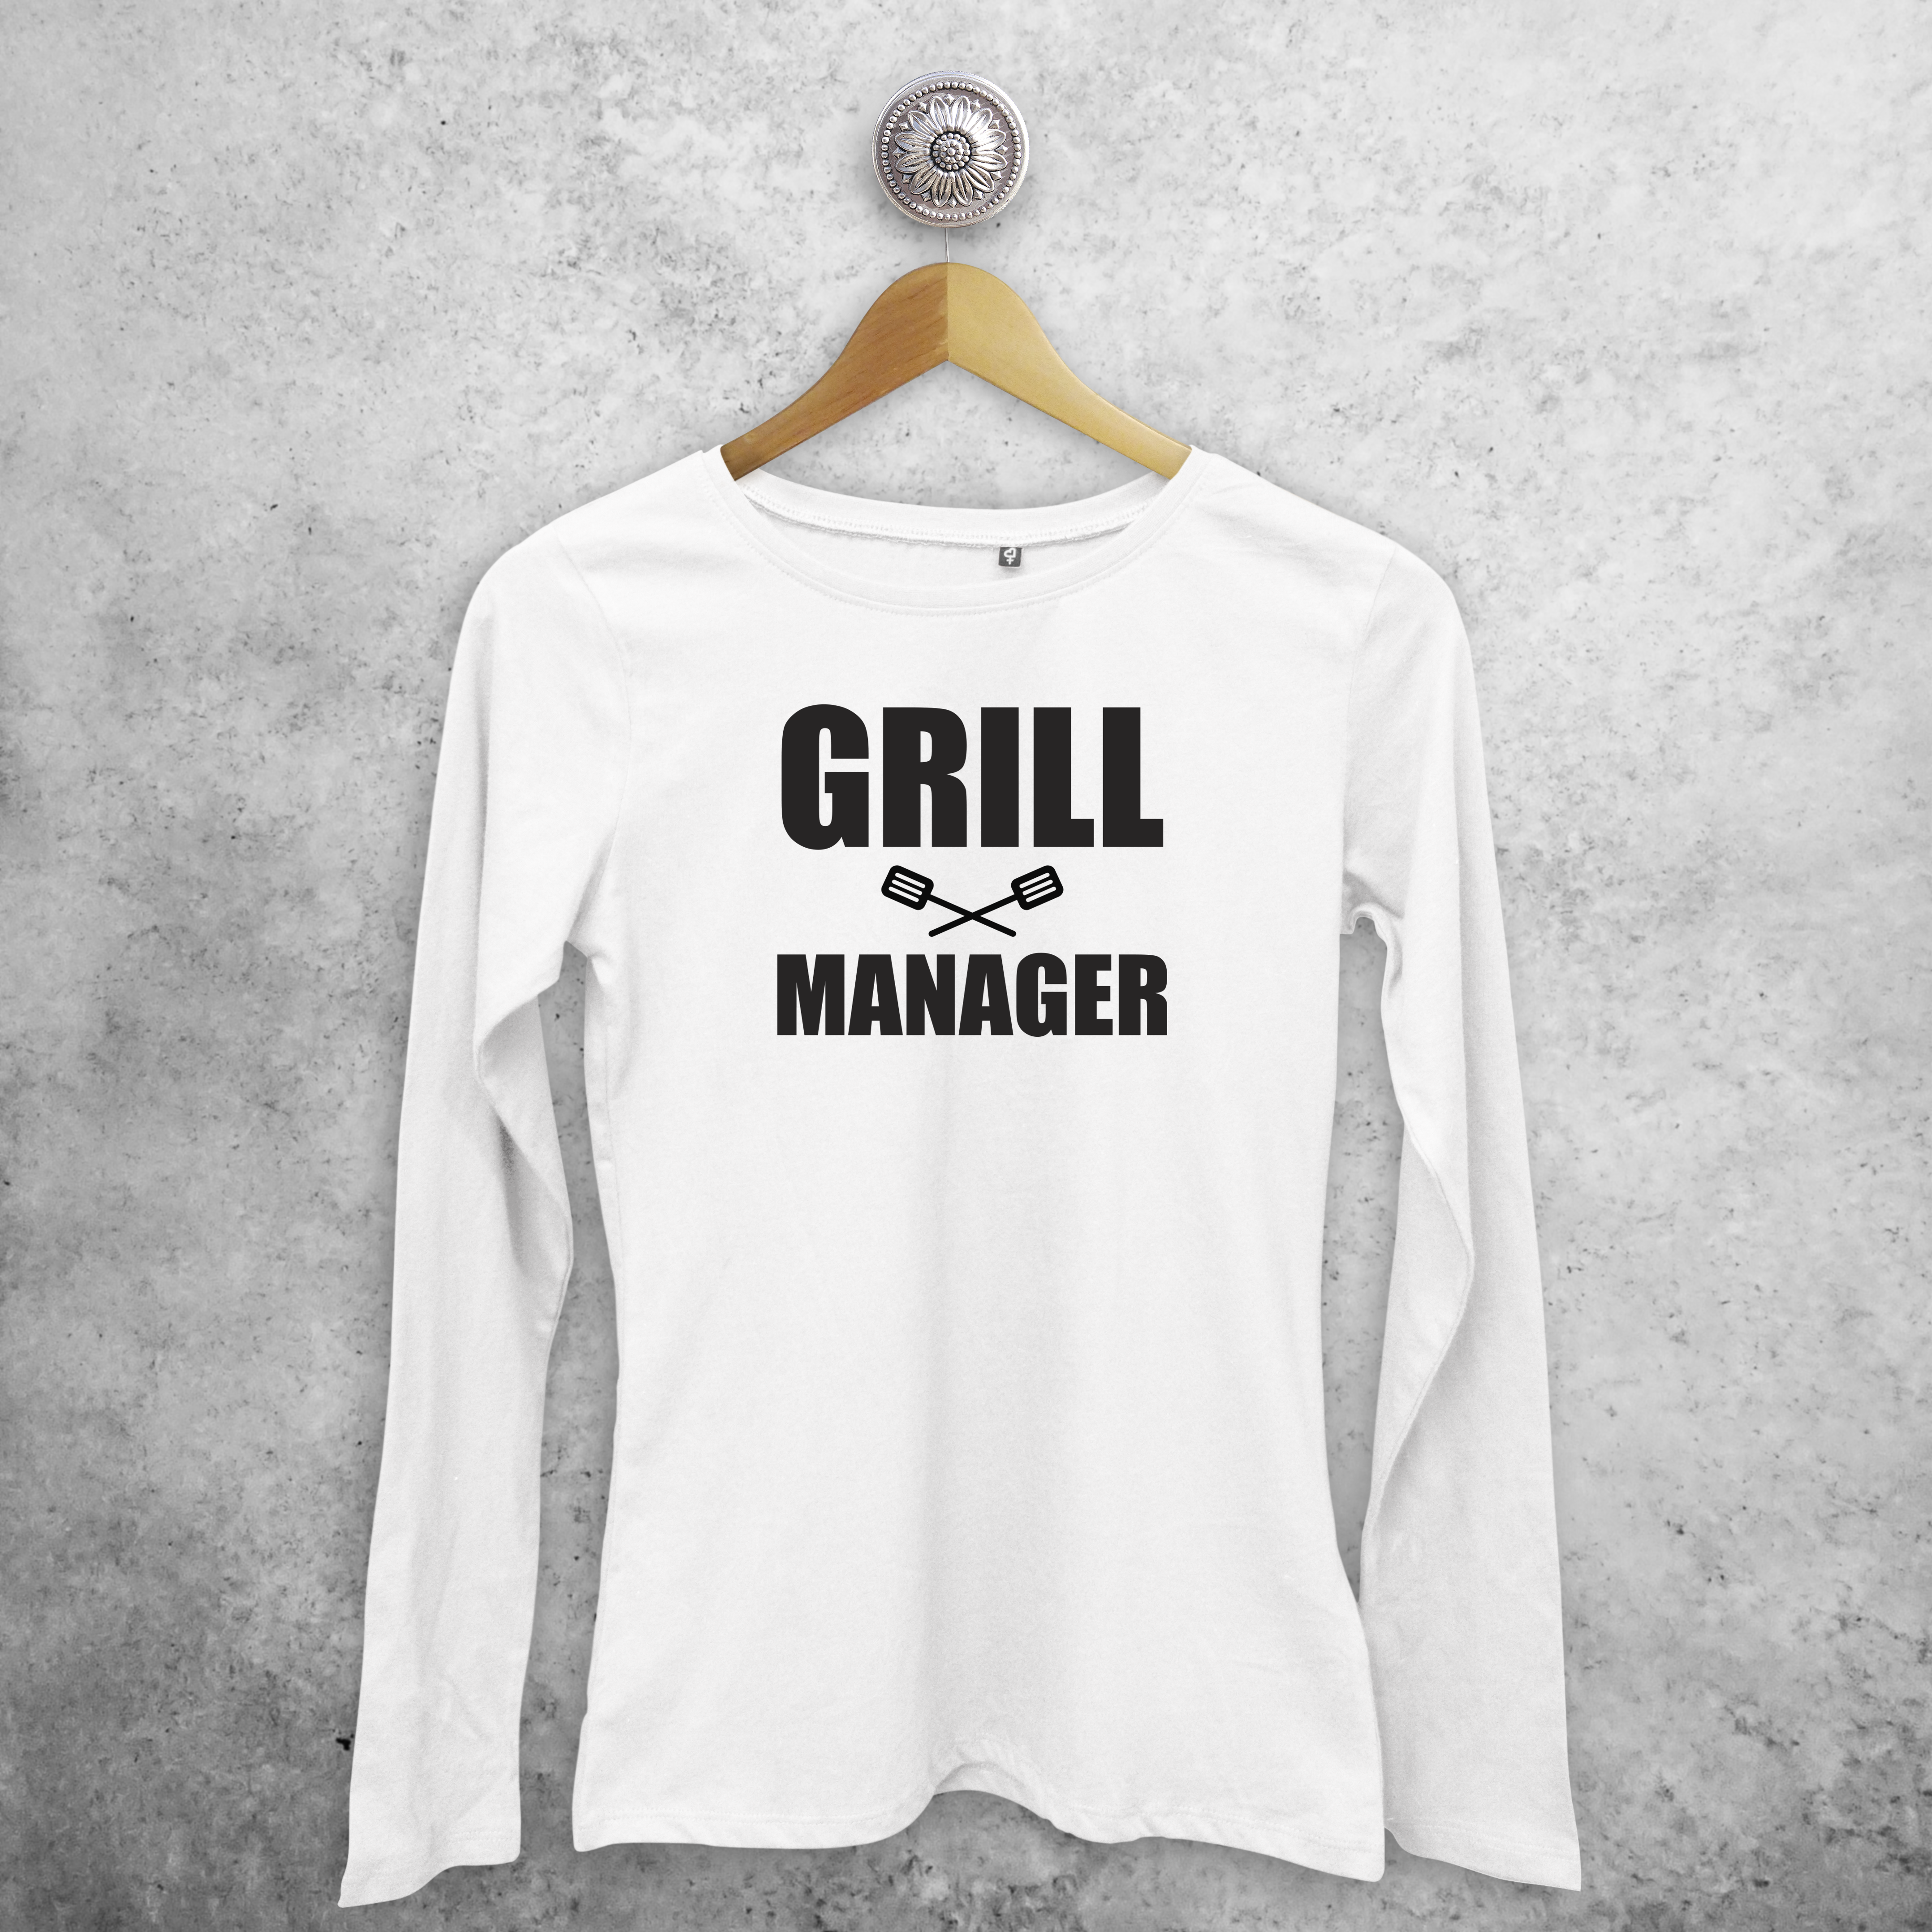 'Grill manager' volwassene shirt met lange mouwen